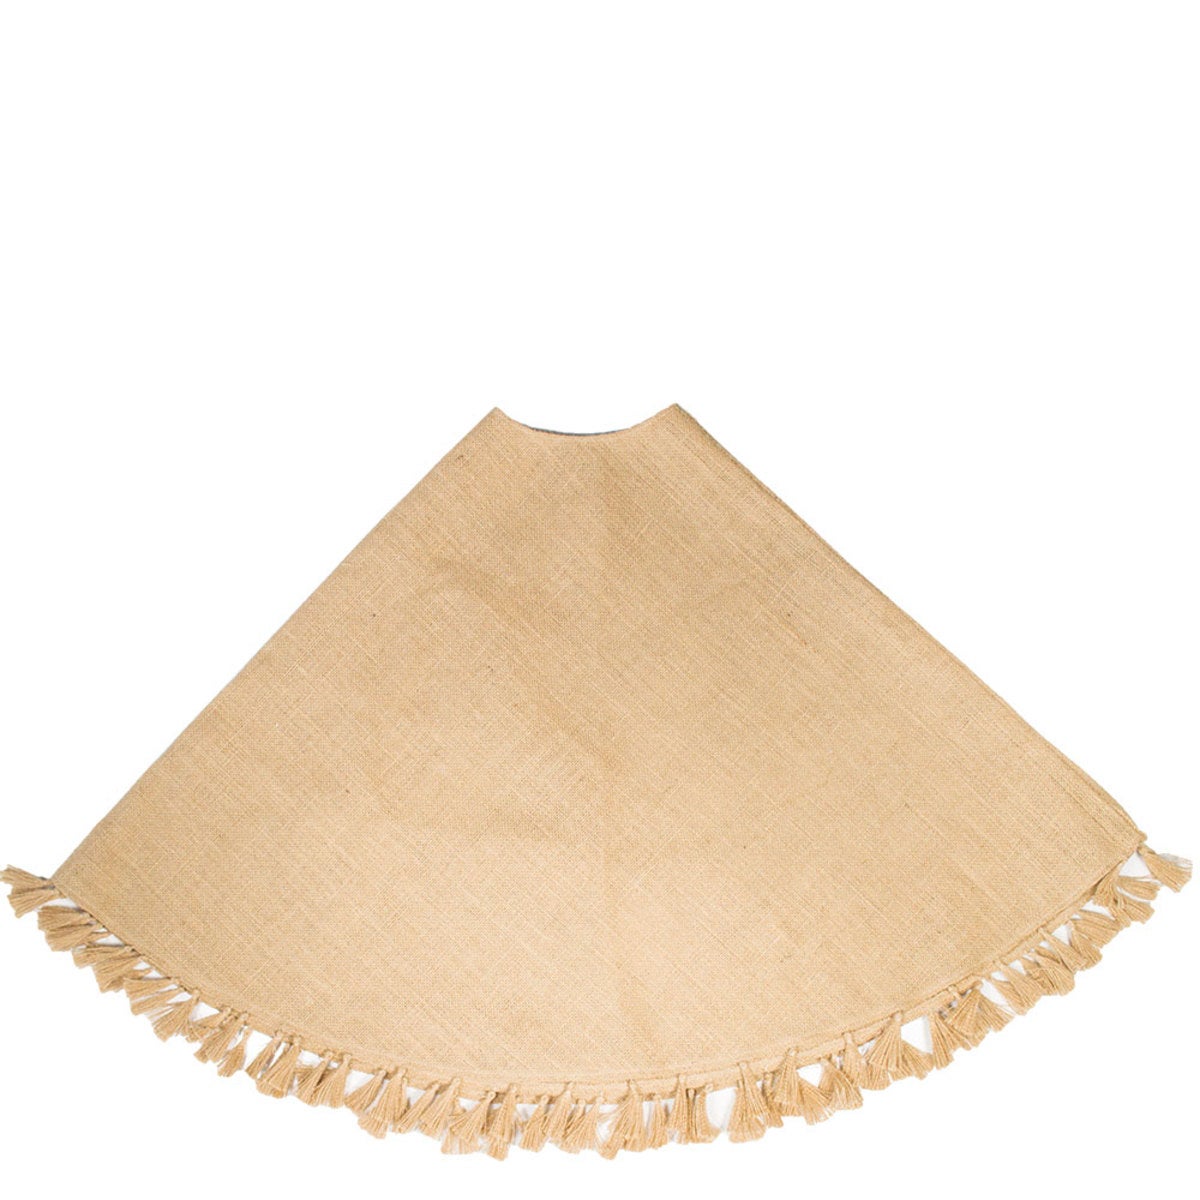 Tree Skirt - Burlap with Tassels